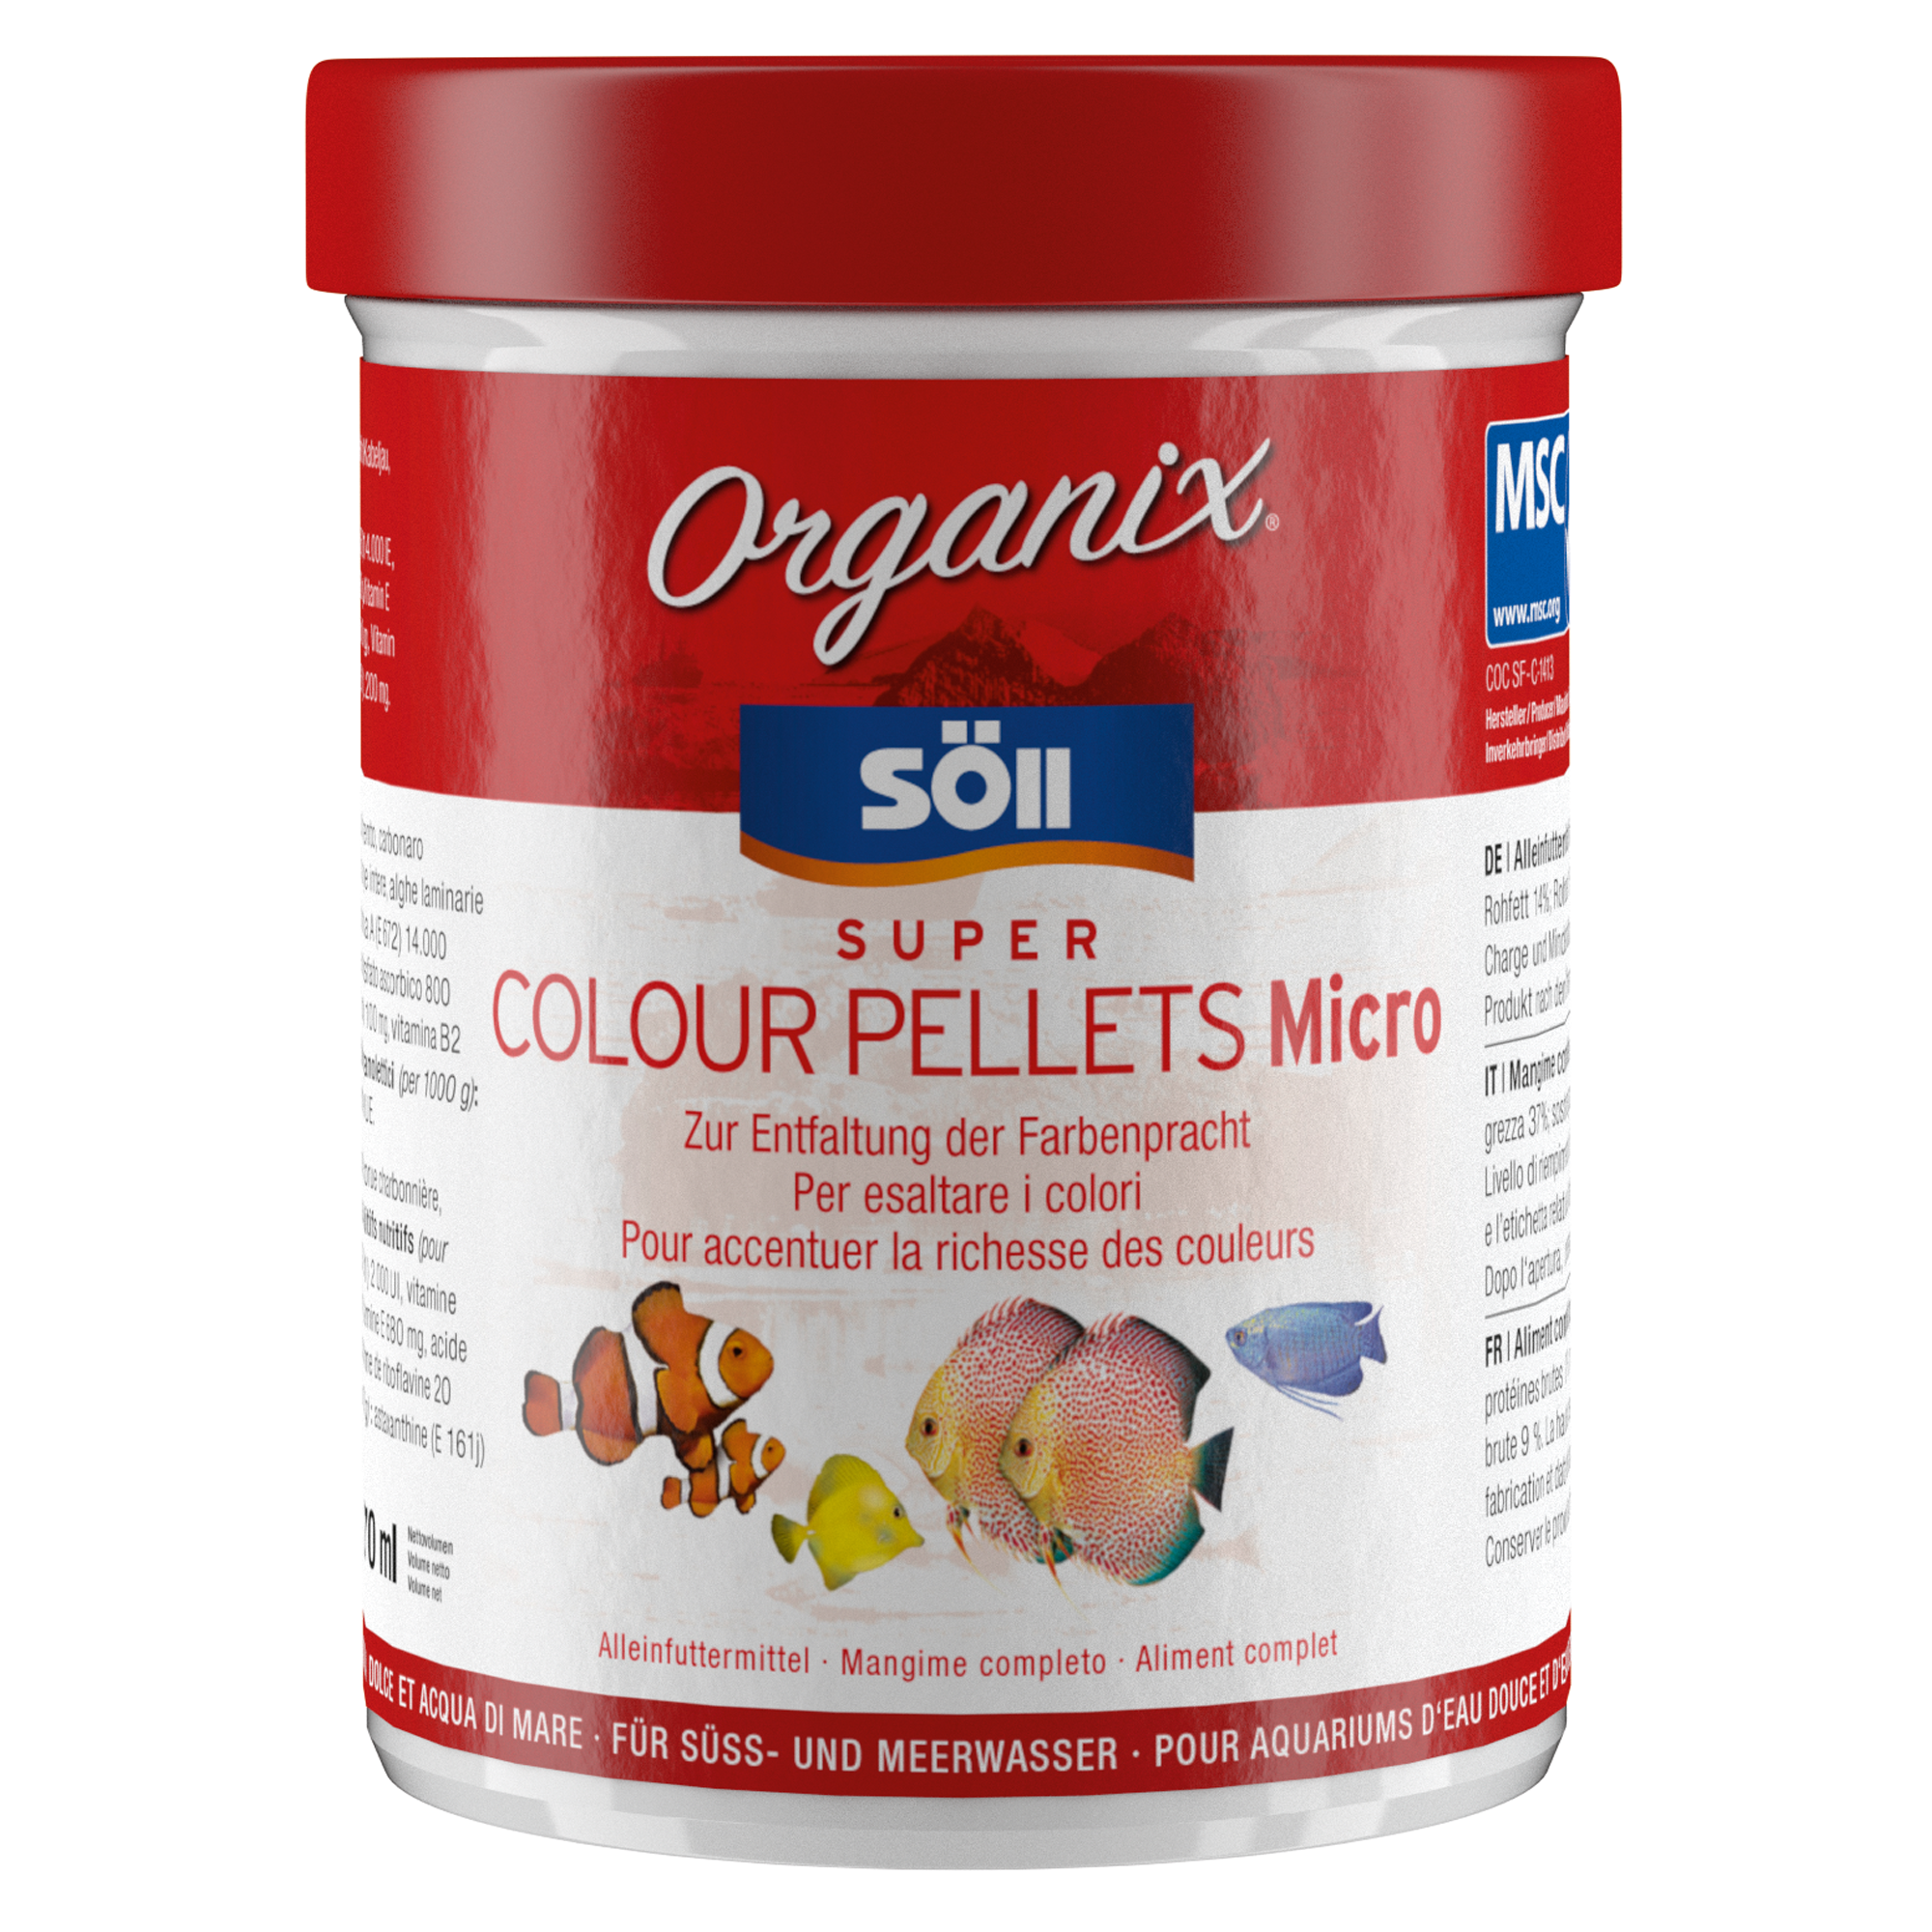 Organix Super Colour Pellets Micro 270 ml + product picture